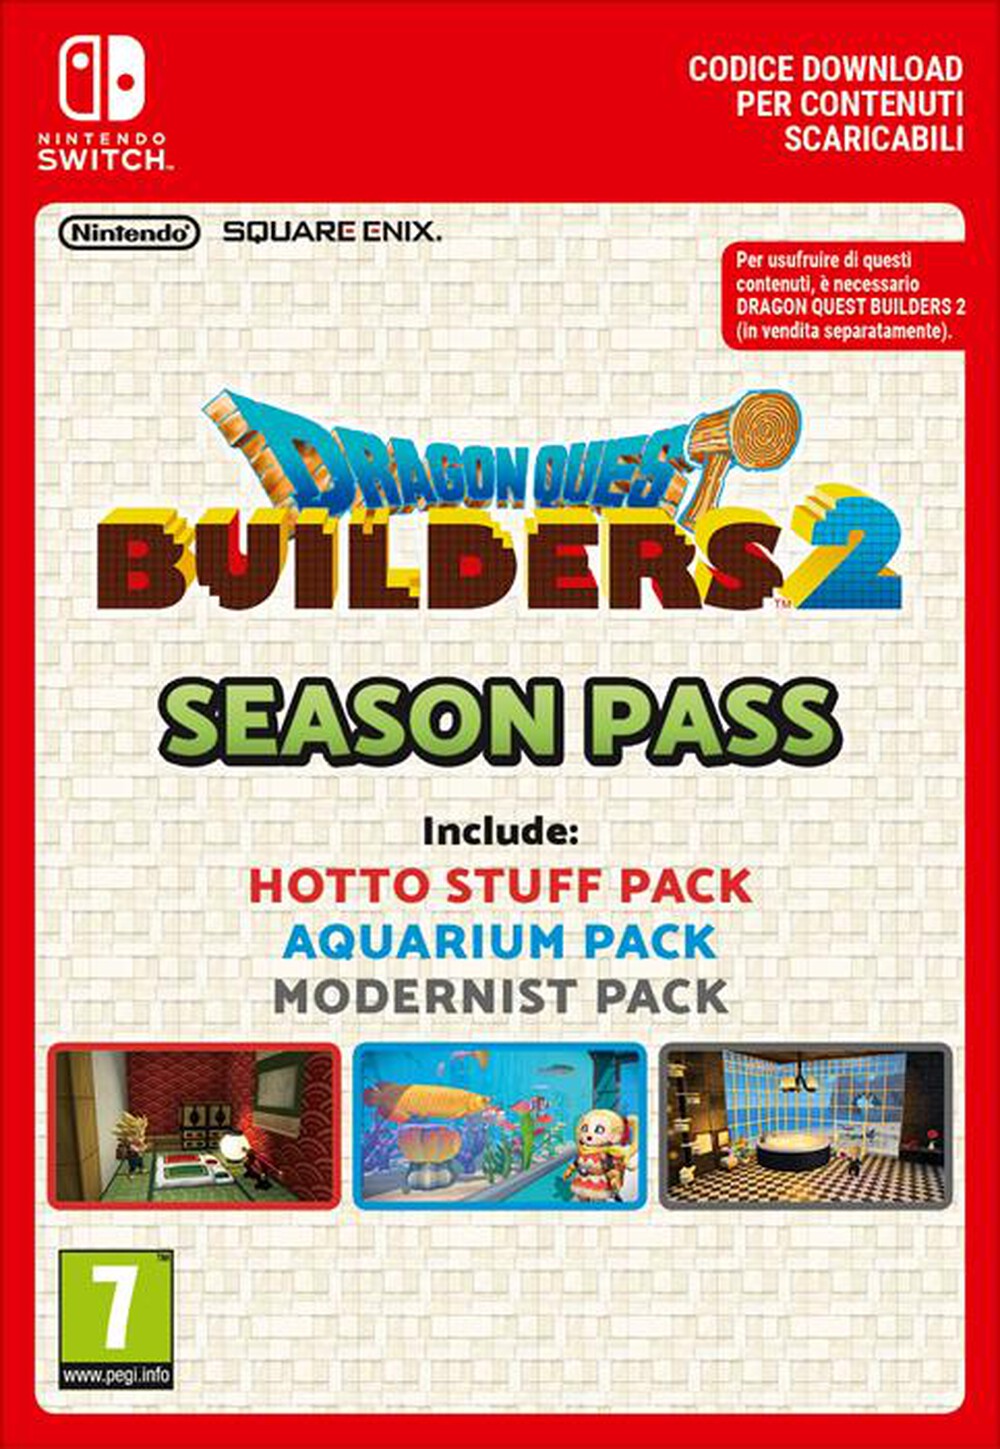 "NINTENDO - Dragon Quest Builders 2 - Season Pass"